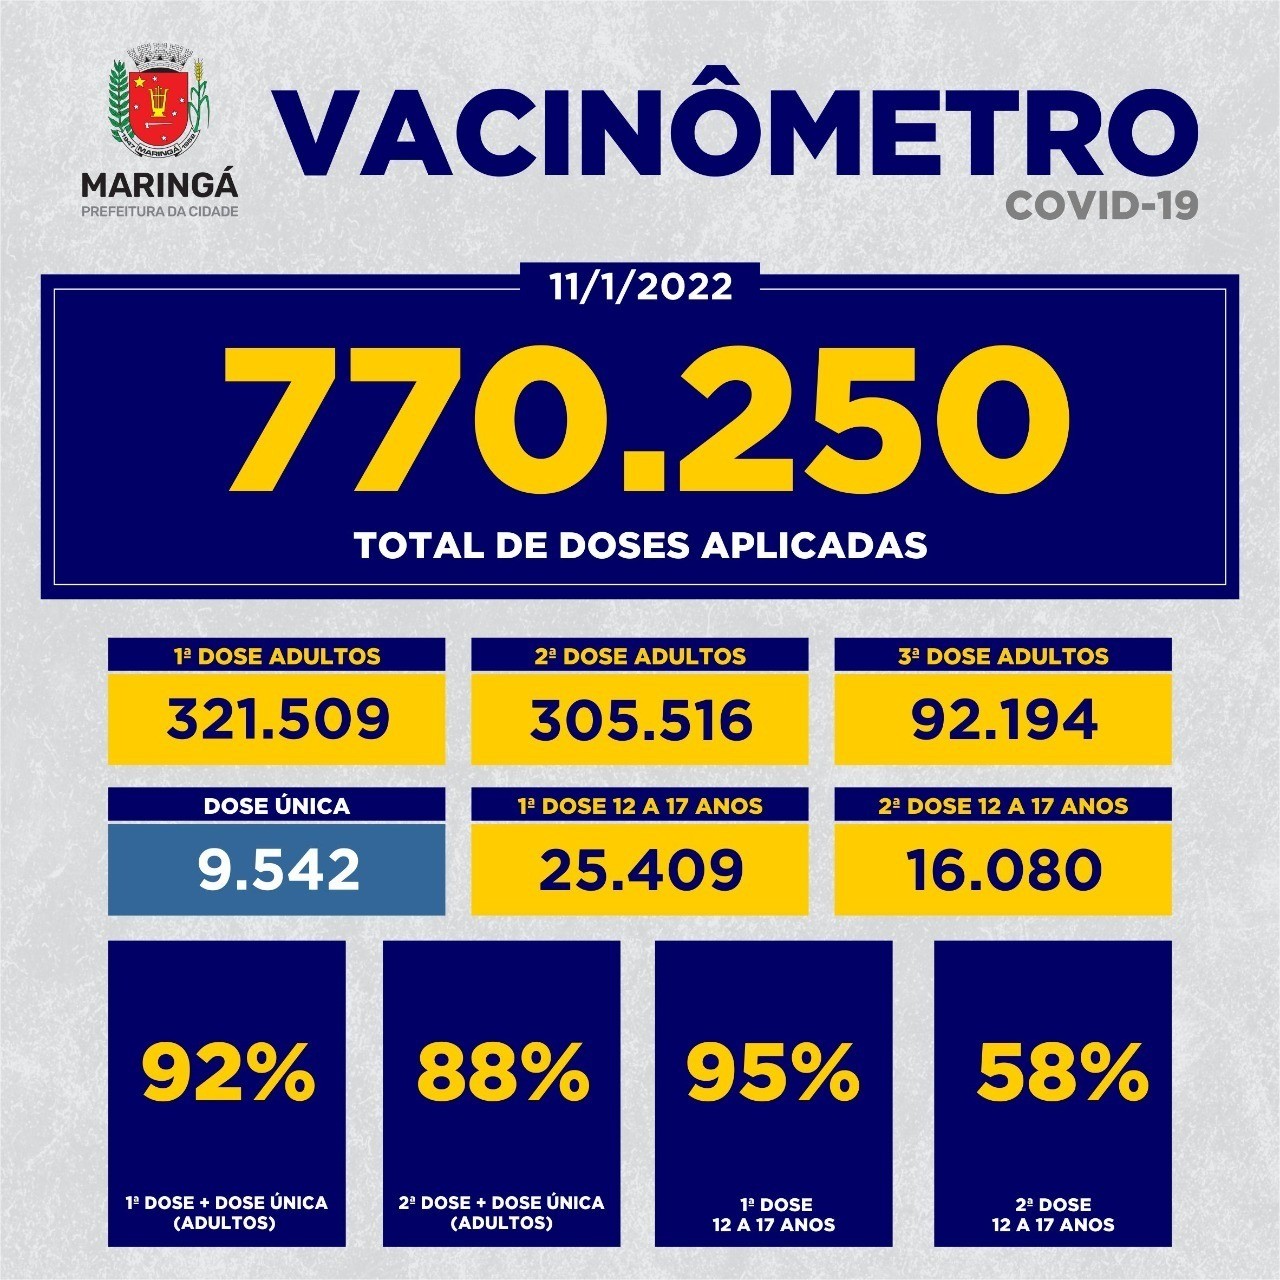 Maringá registra 770.250 pessoas vacinadas contra coronavírus